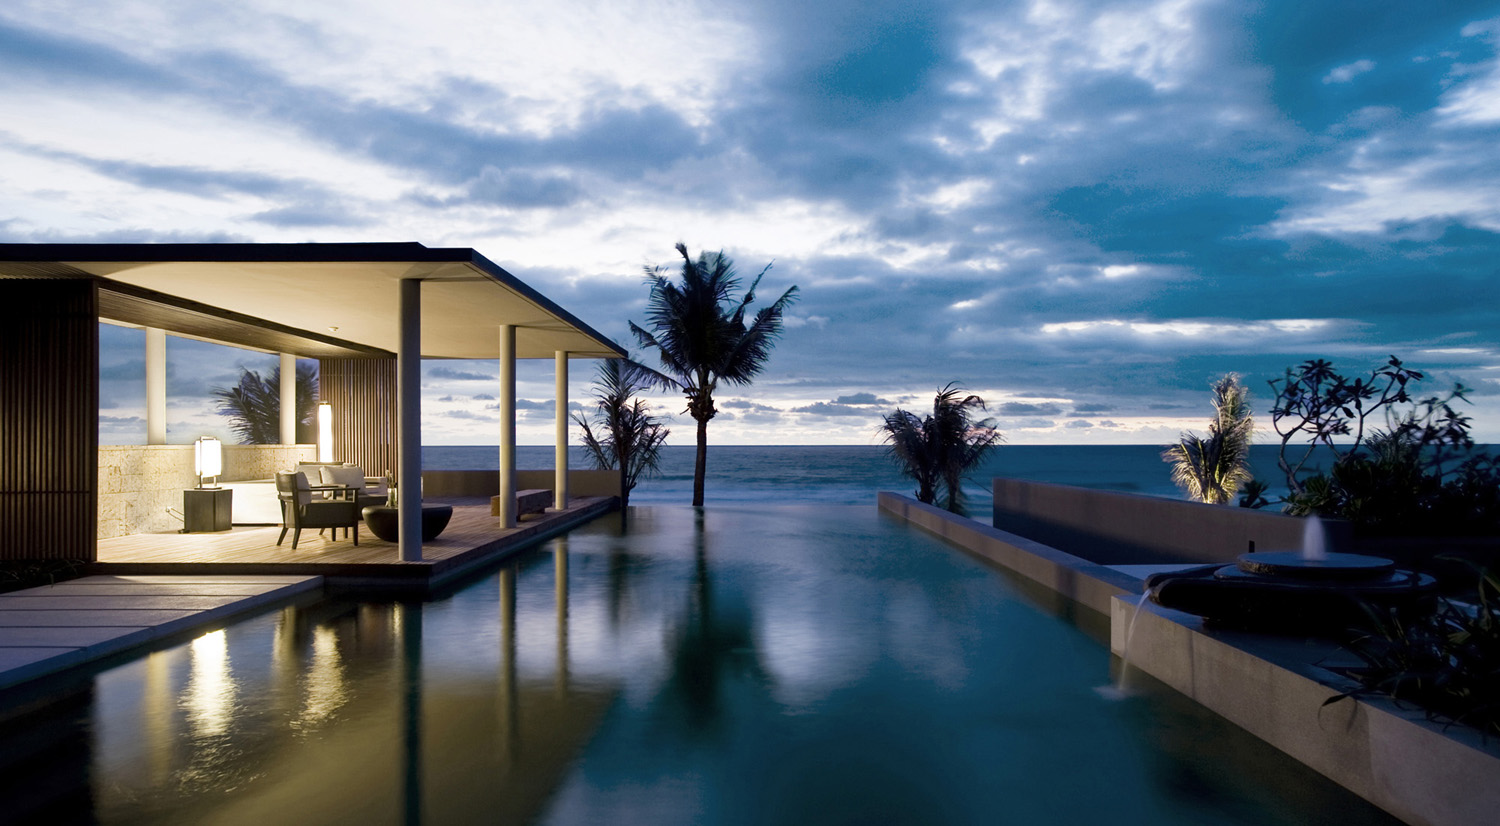 Exquisite-Exotic-Resort-Alila-Villas-Soori-in-Bali-by-SCDA-Architects-Homesthetics-12.jpg